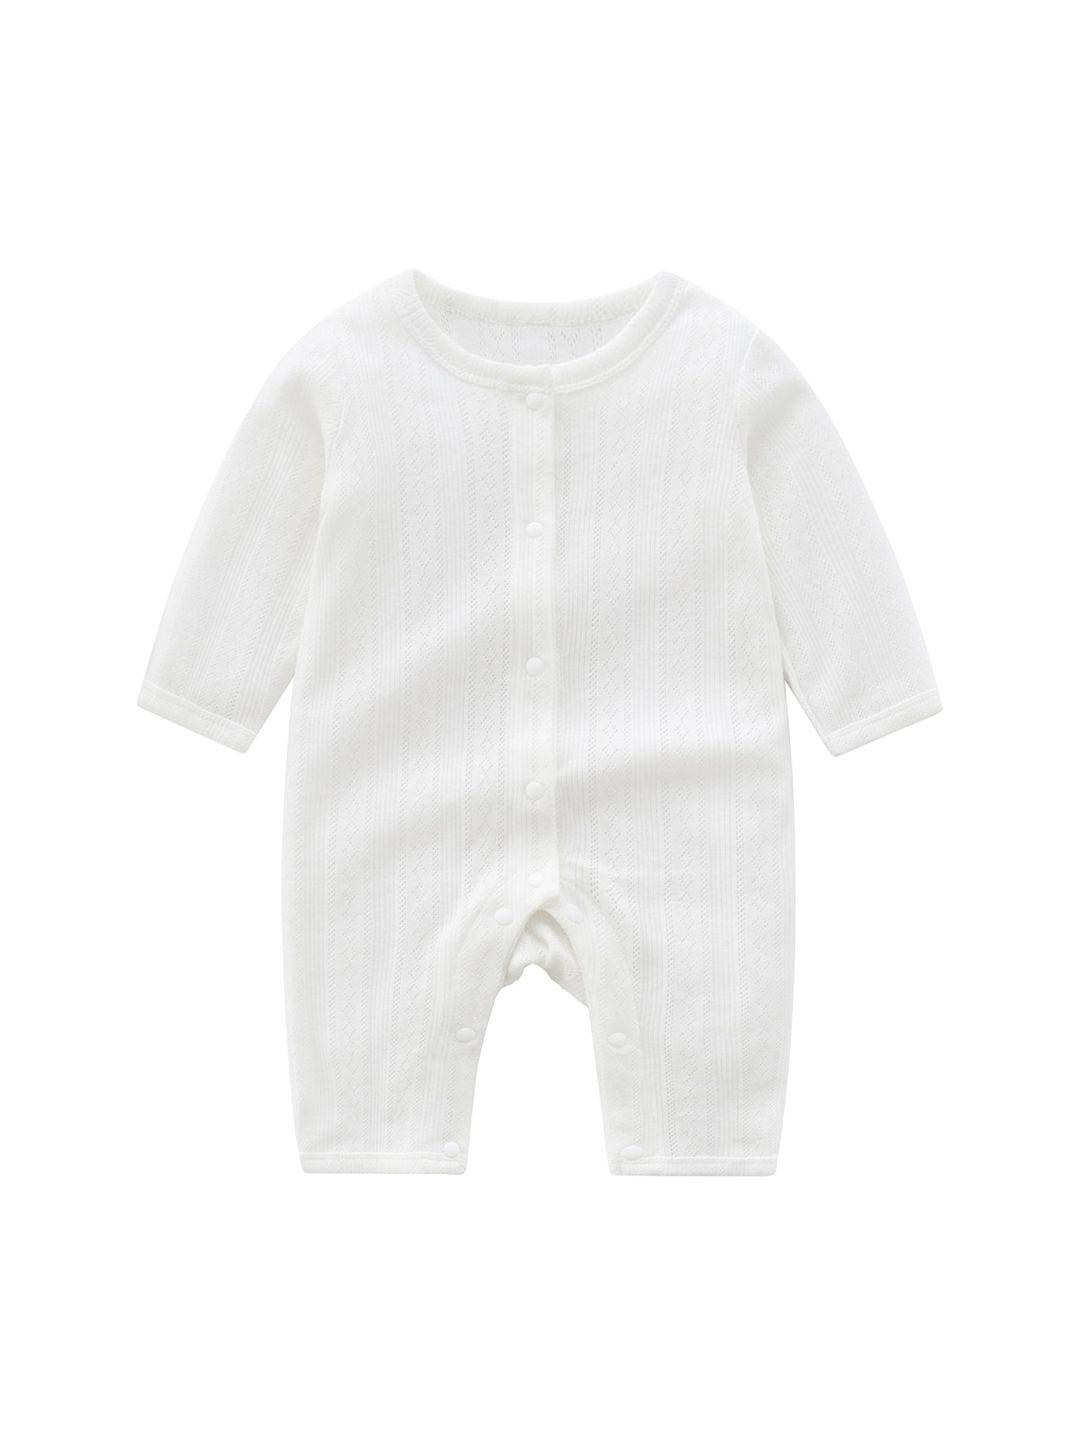 StyleCast Infants White Self Design Cotton Romper